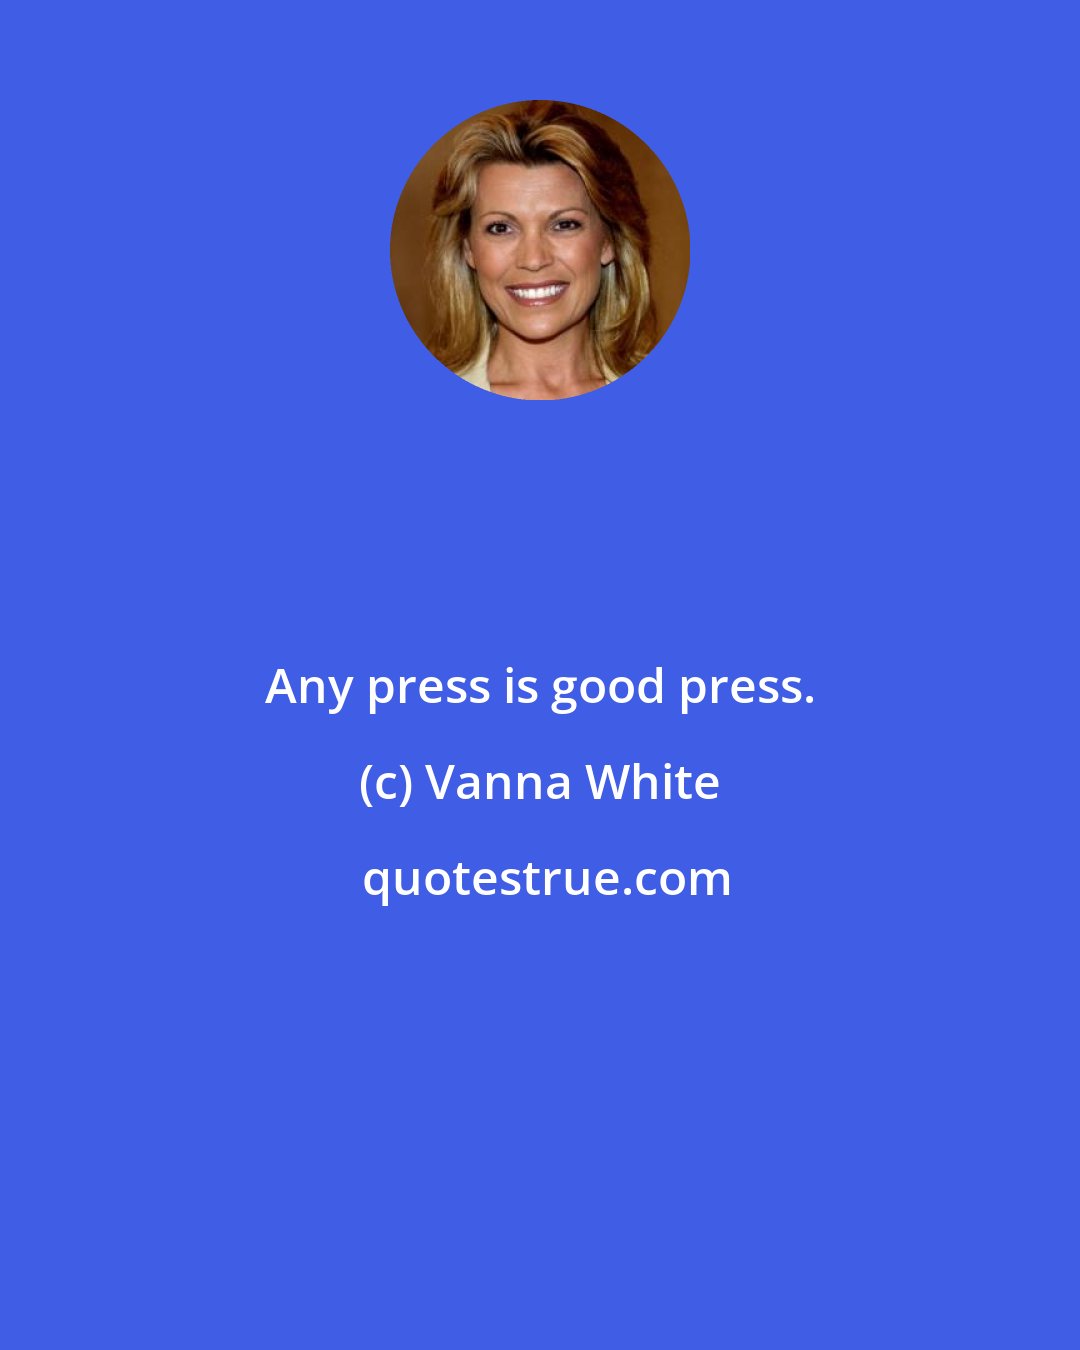 Vanna White: Any press is good press.